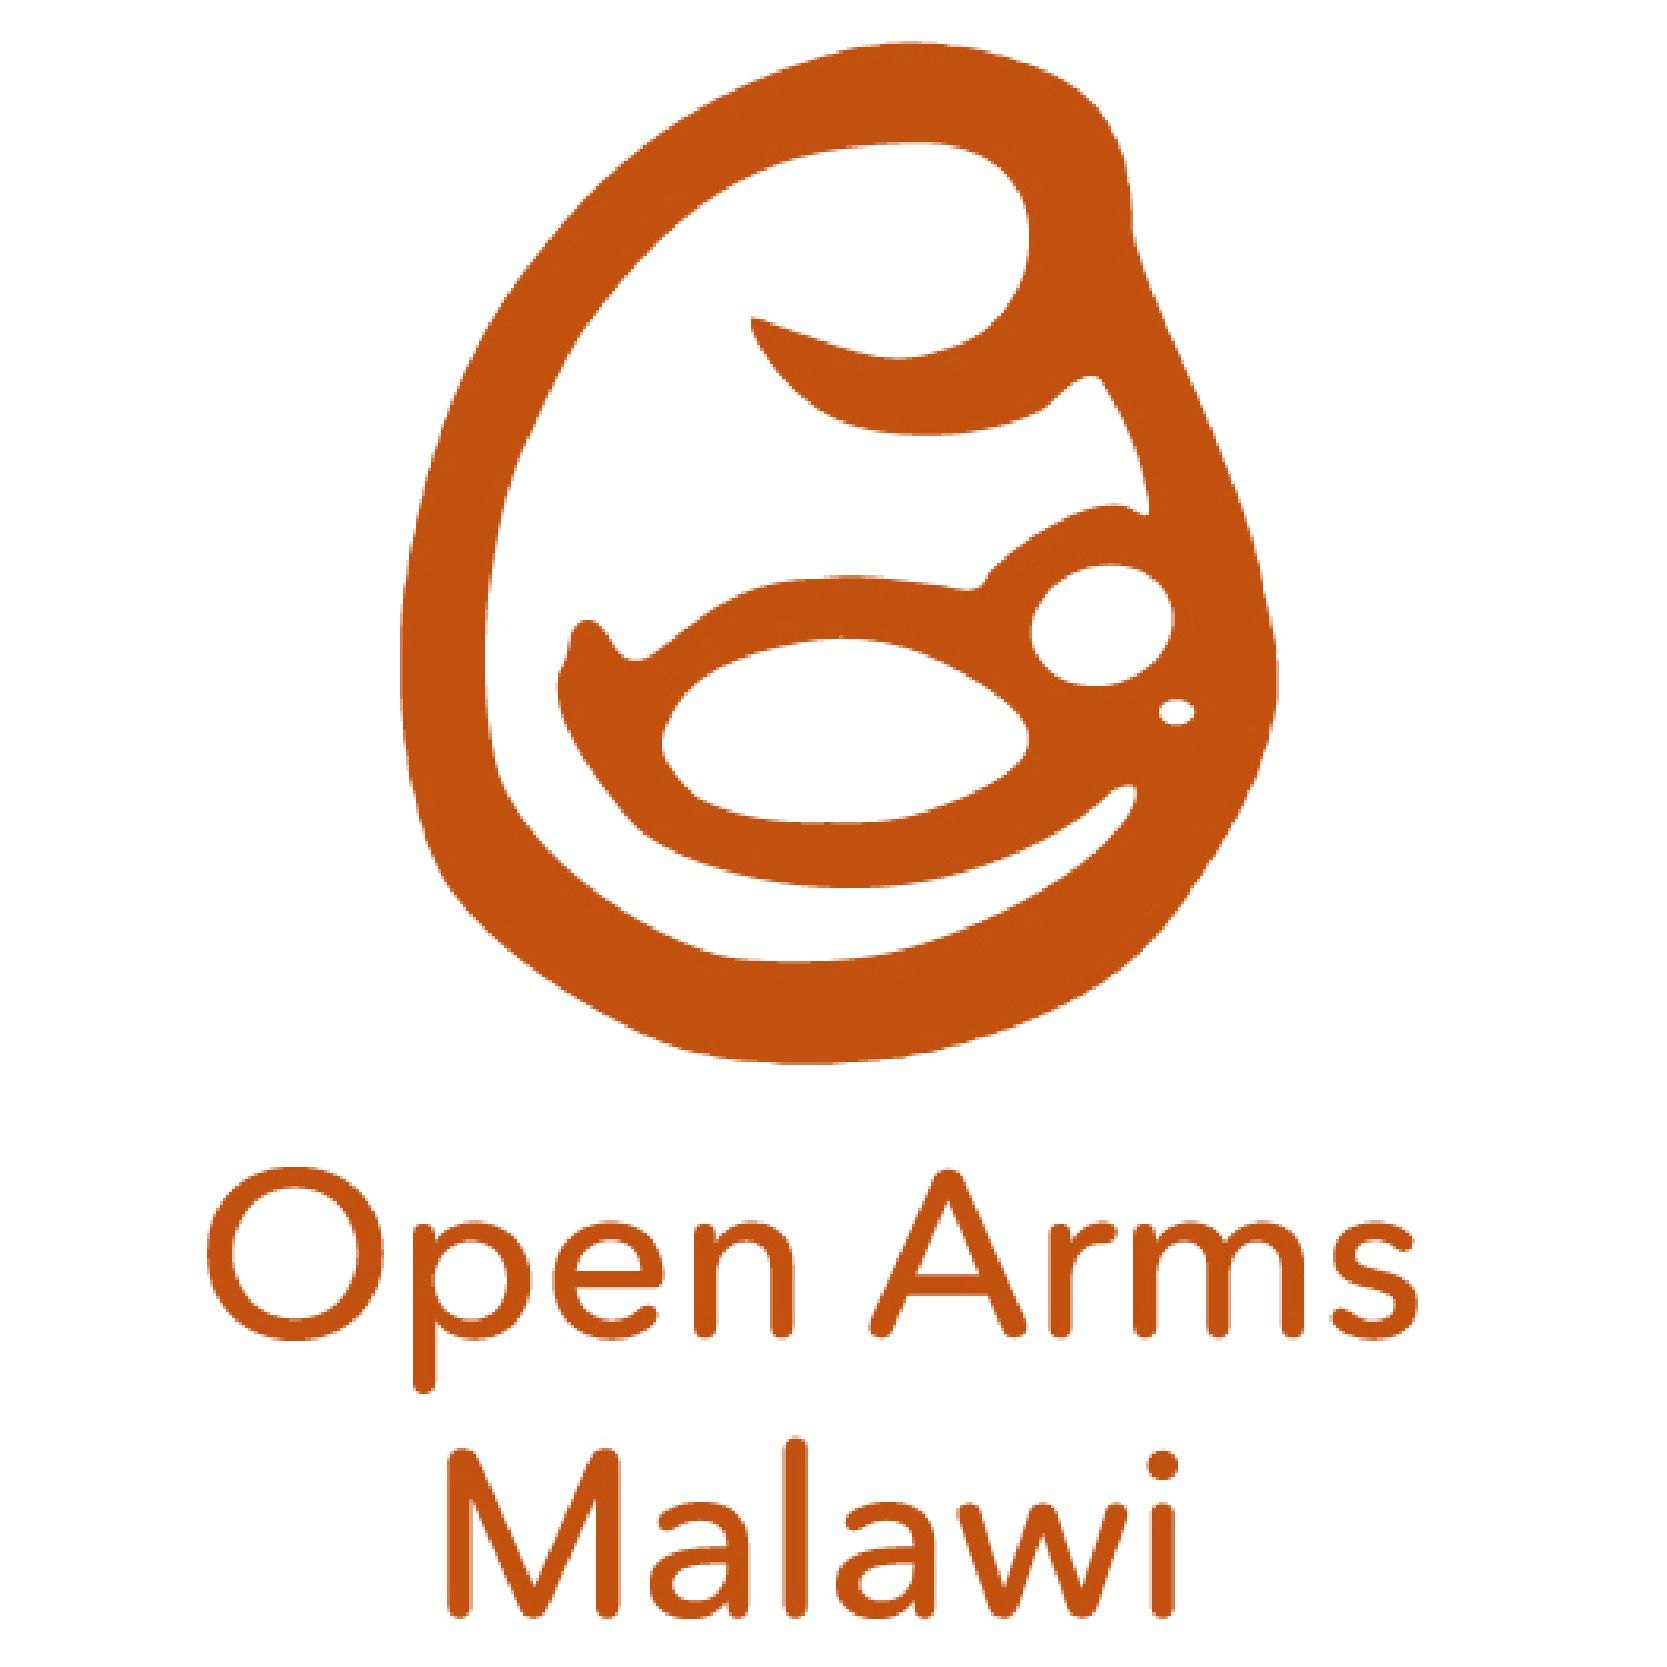 Open Arms Malawi square logo